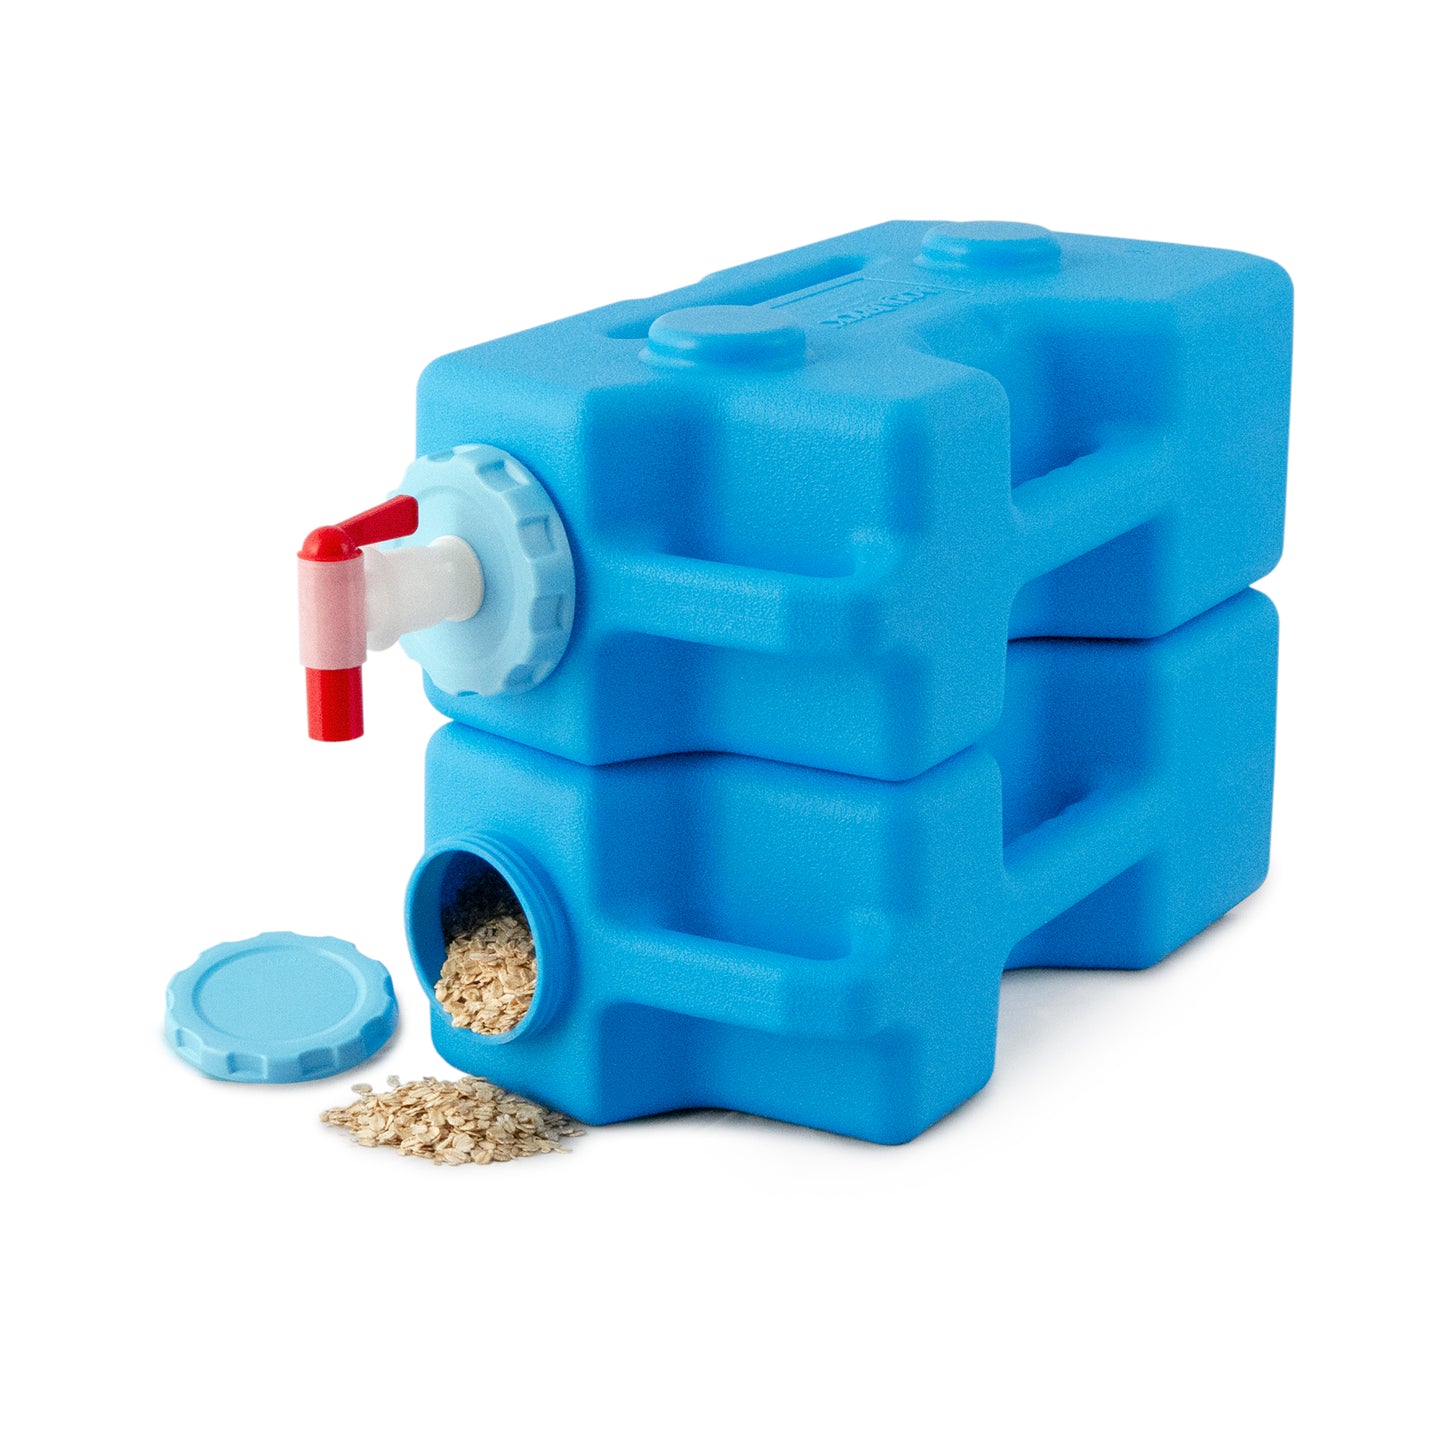 AquaBrick Water and Food Storage Container - Aqua Brick Container